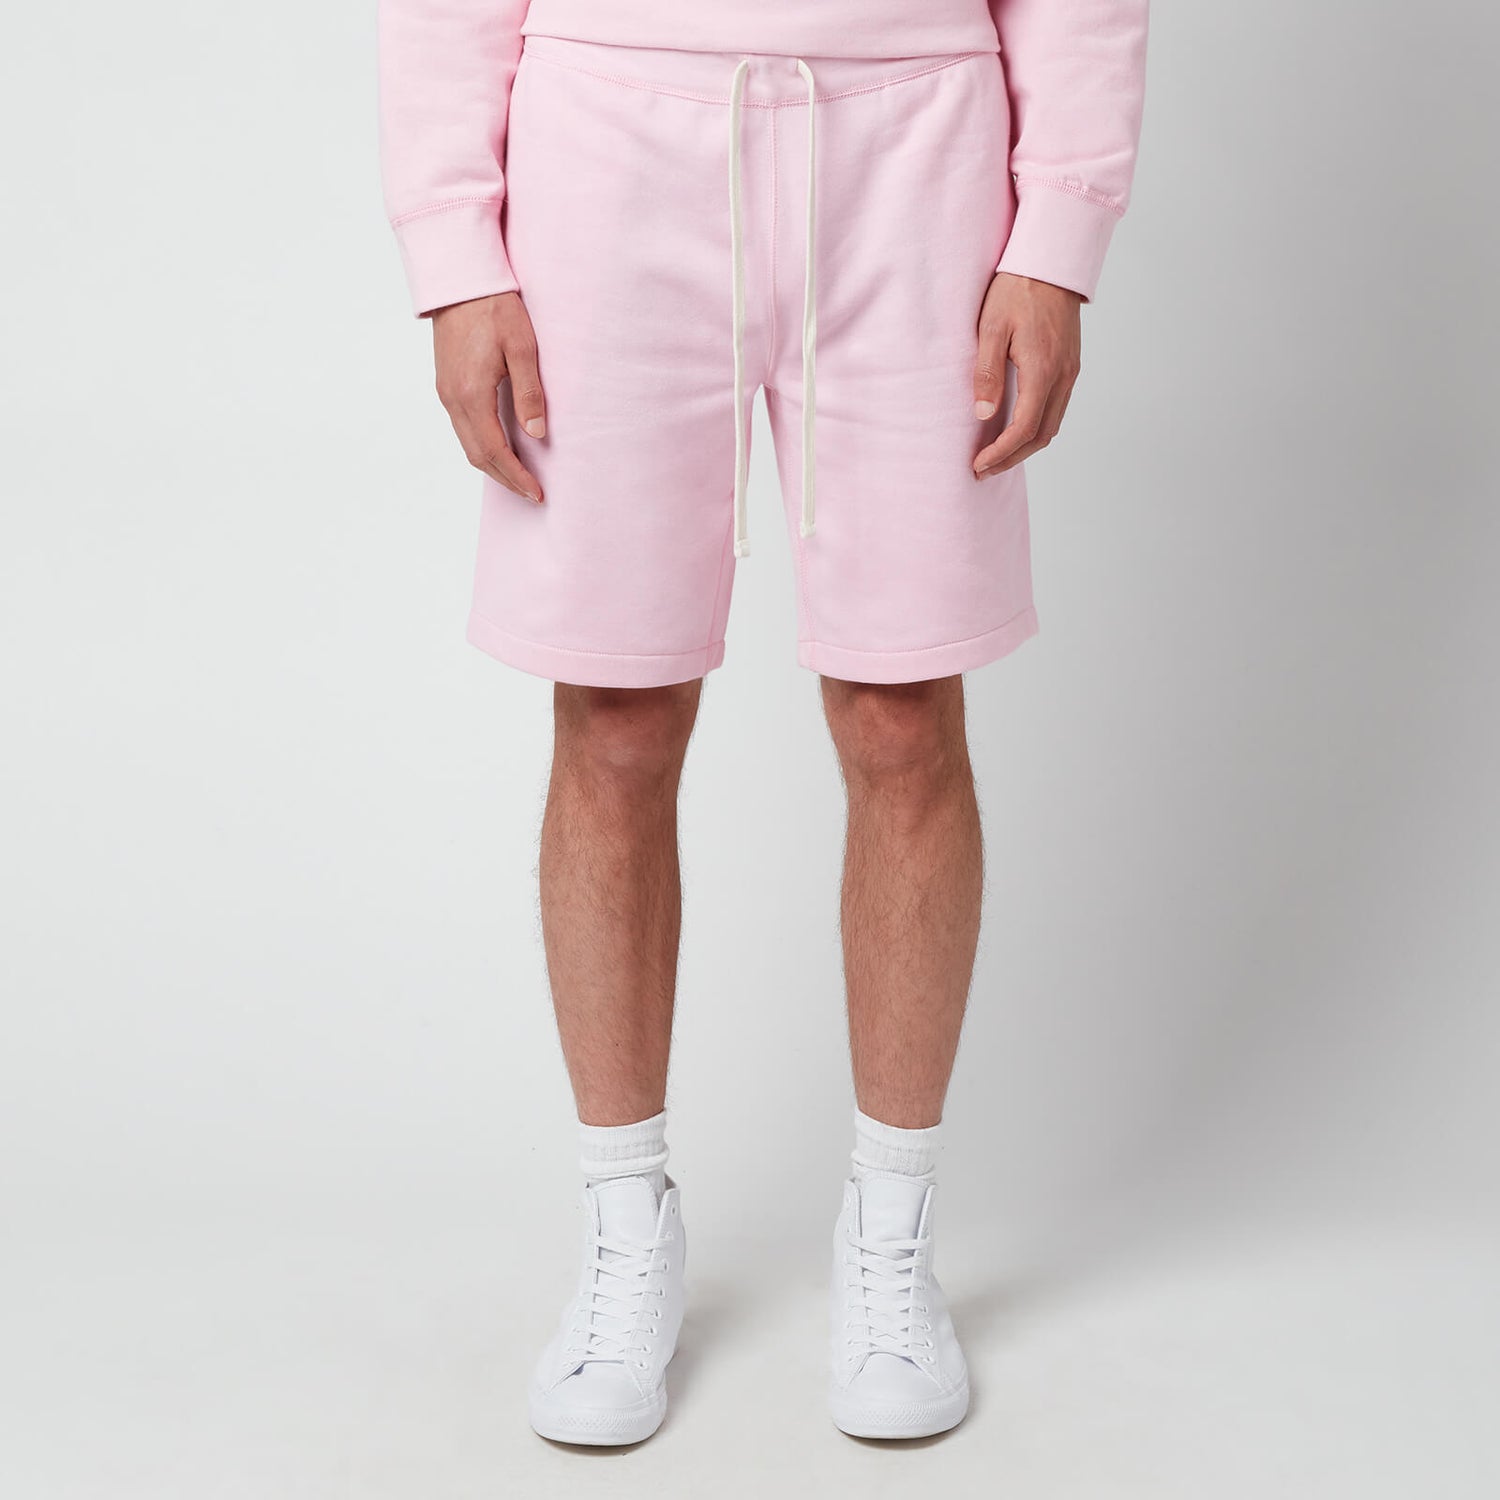 Polo Ralph Lauren Men's Fleece Shorts - Carmel Pink - S